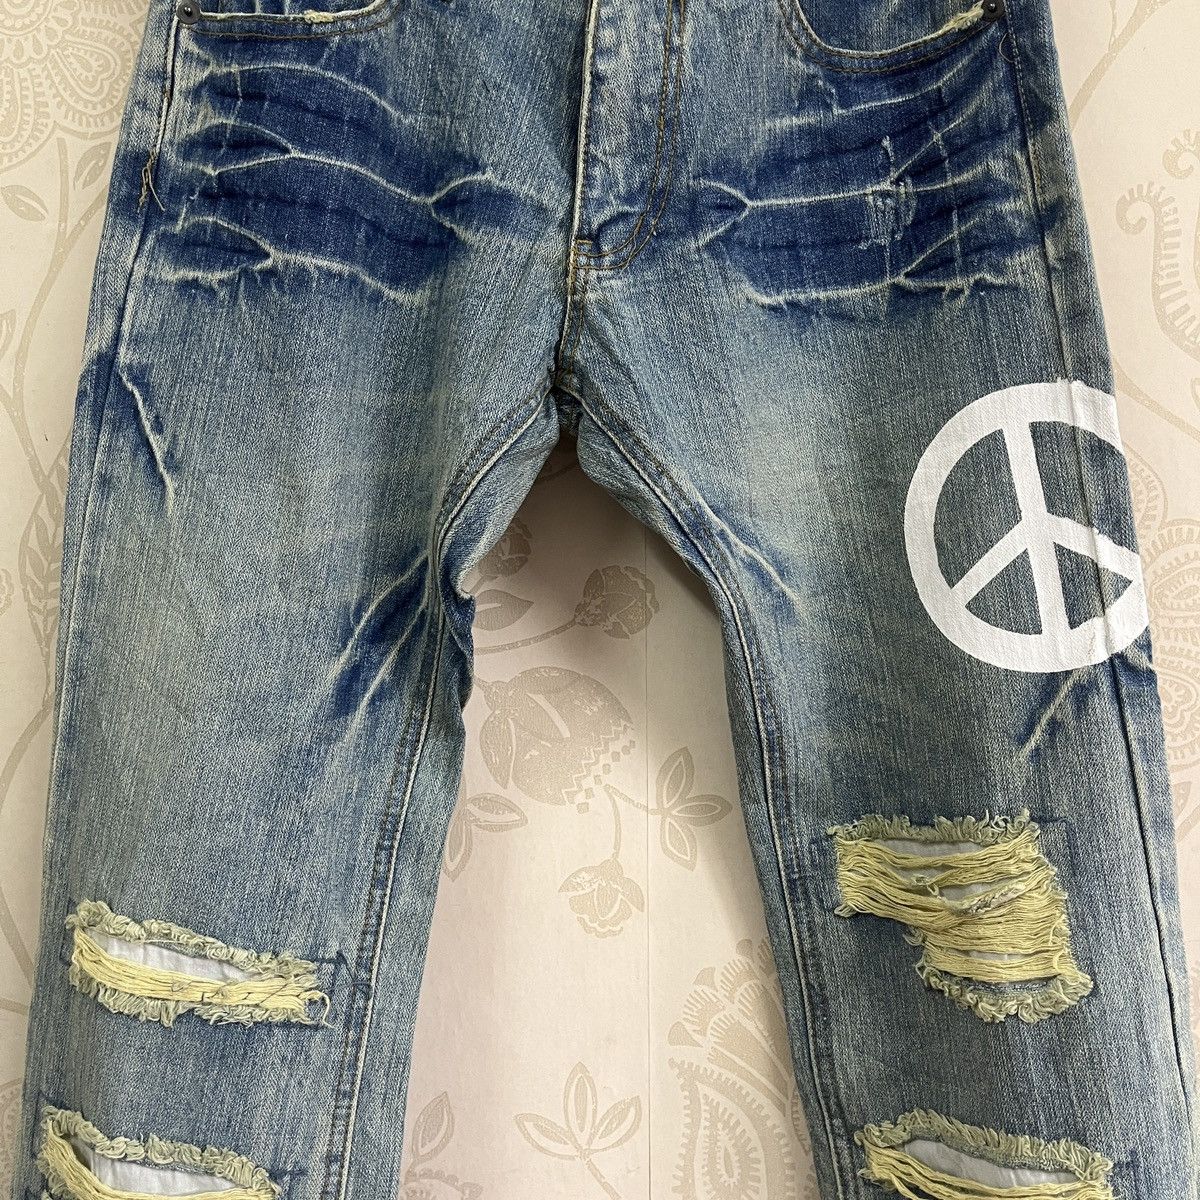 Distressed Hippies Peace Vintage Japan Jeans Acid Wash 30X32 - 5